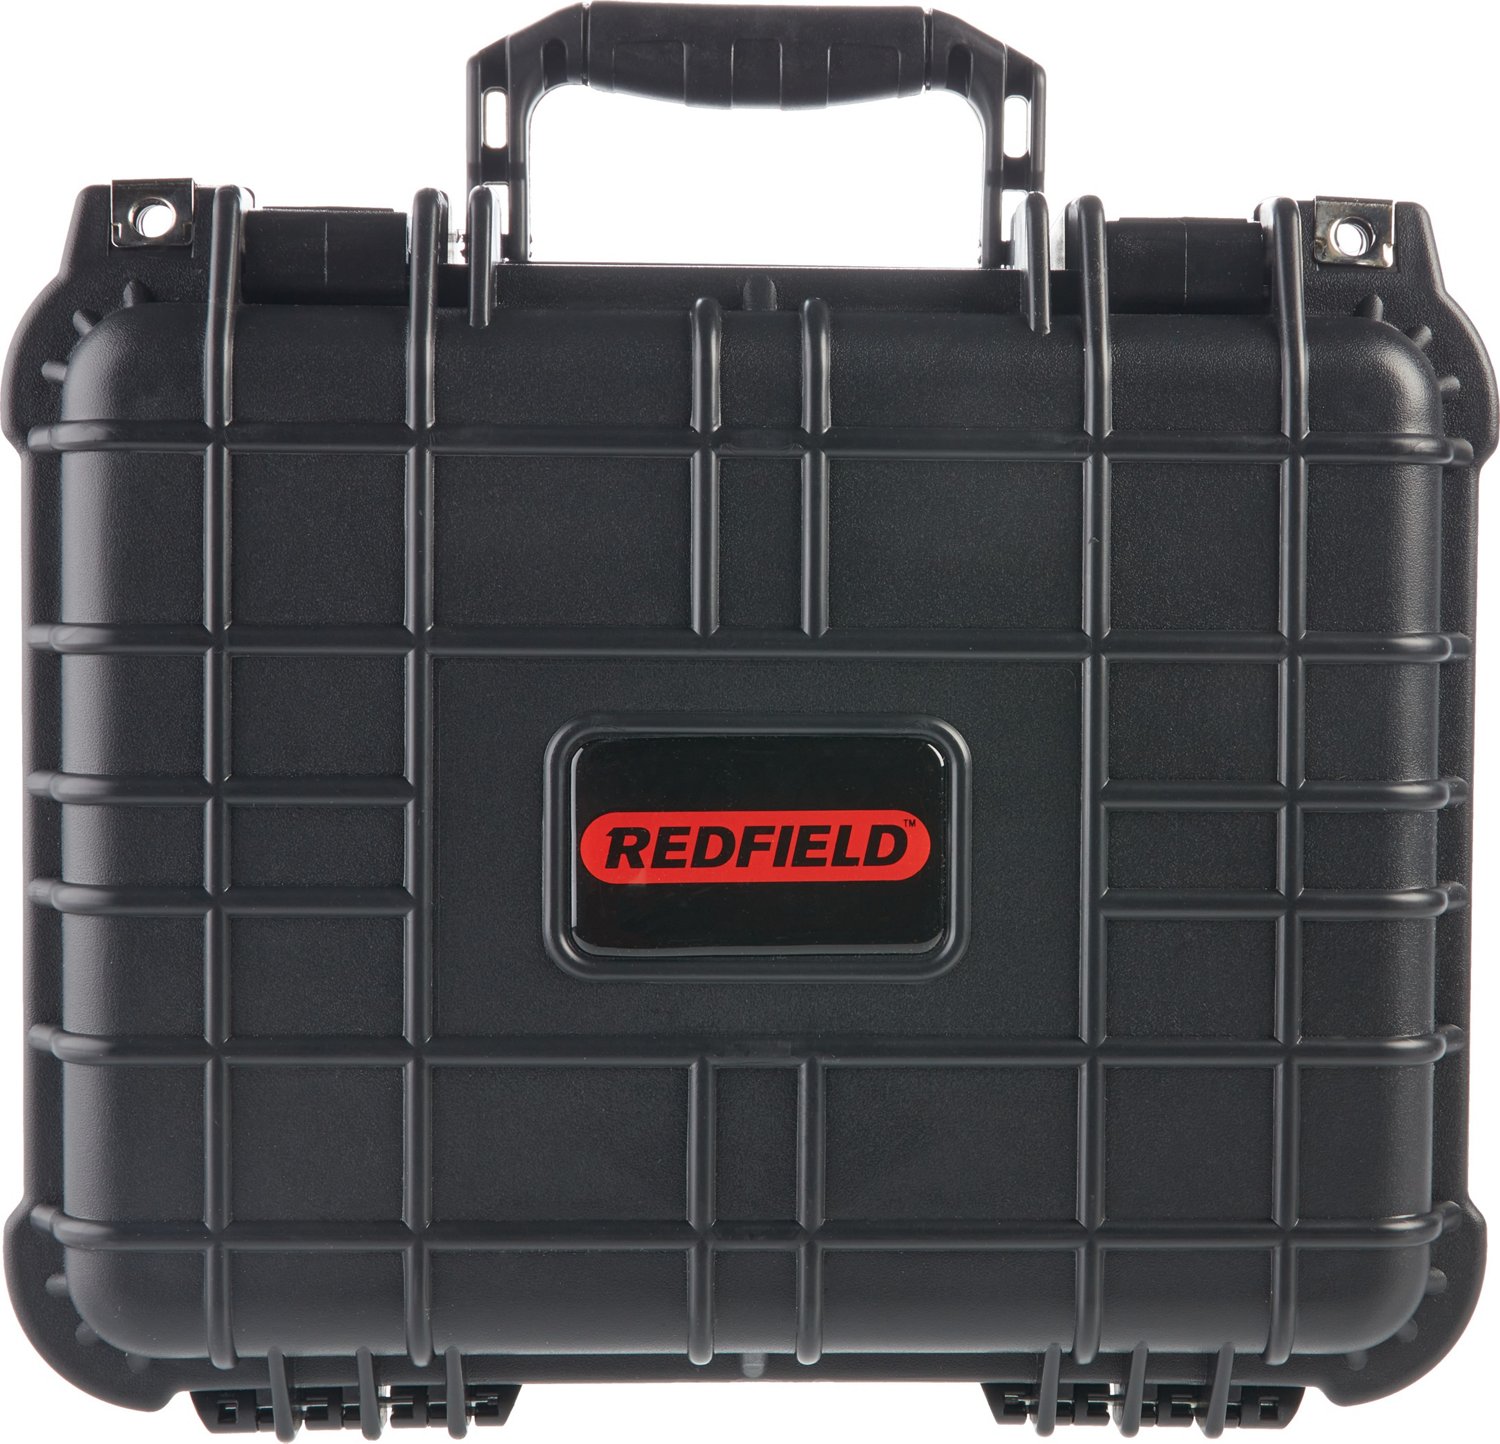 Redfield Gun Cases + Bags